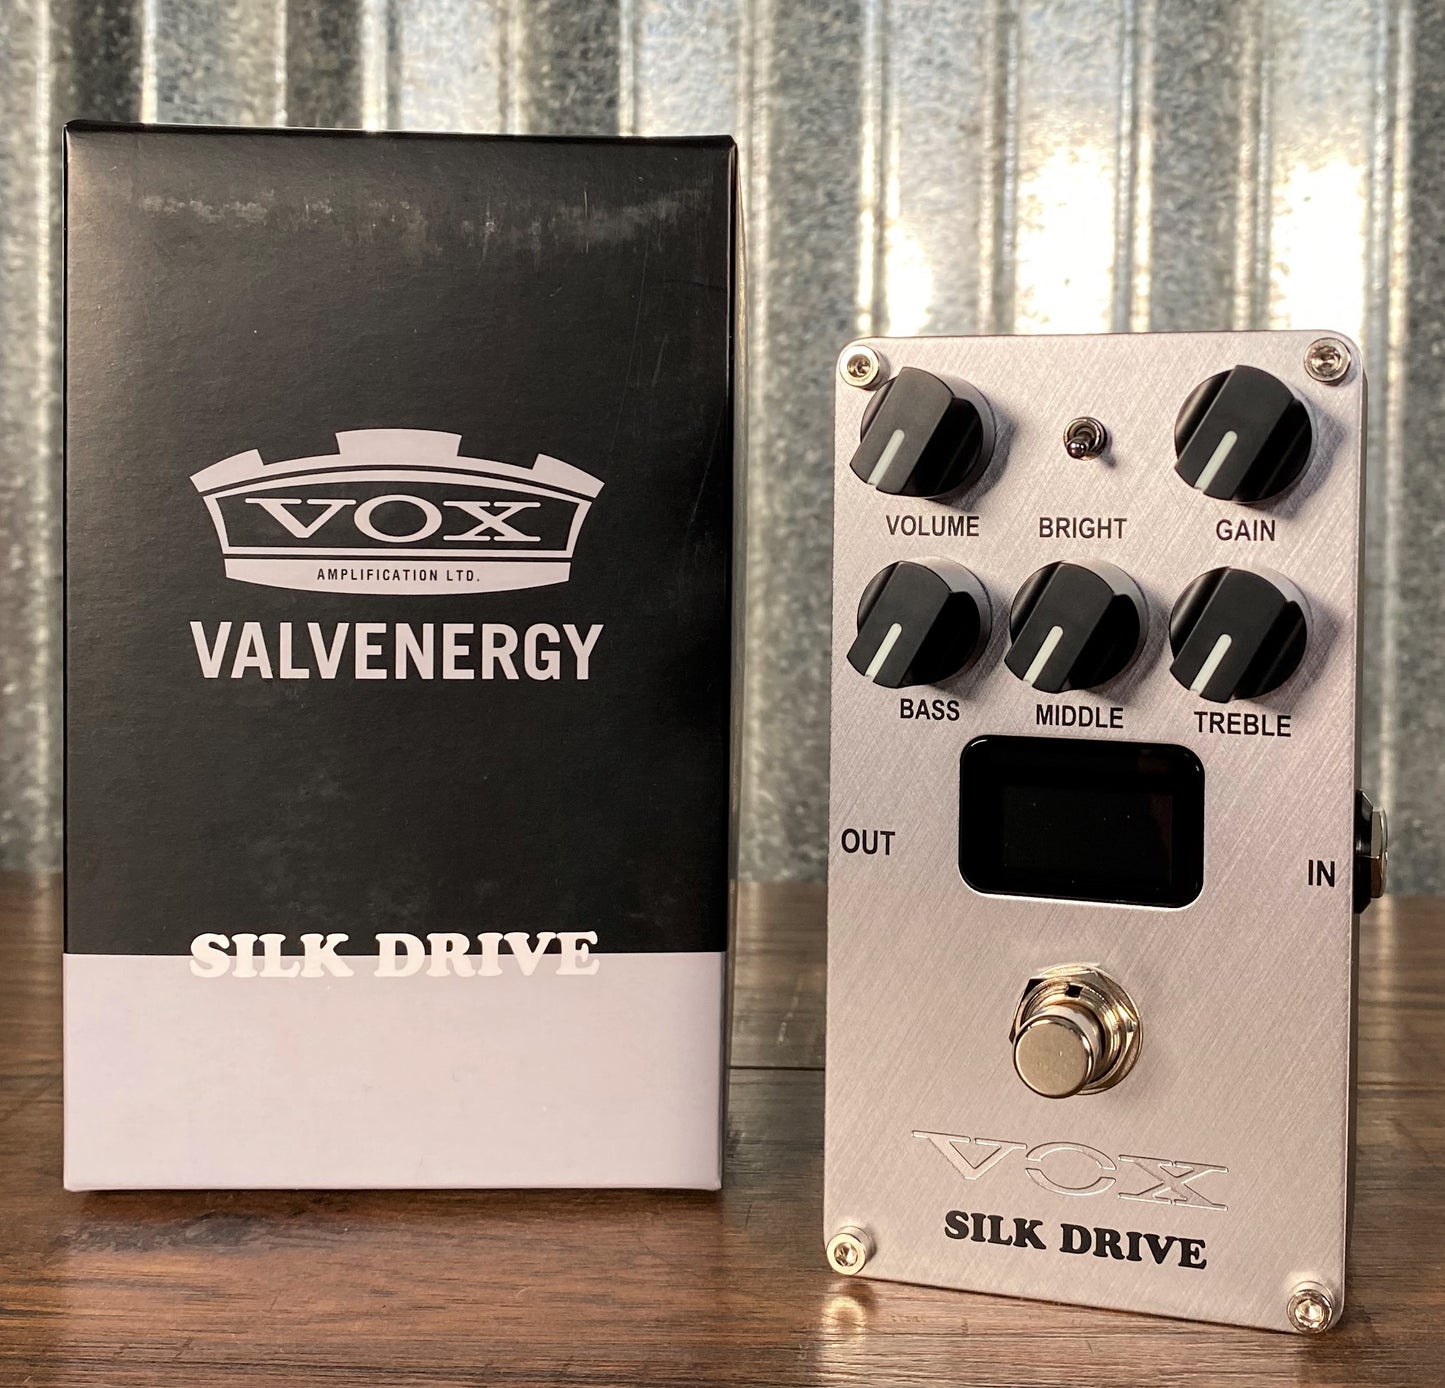 VOX VESD Valvenergy Silk Drive Guitar Effect Pedal